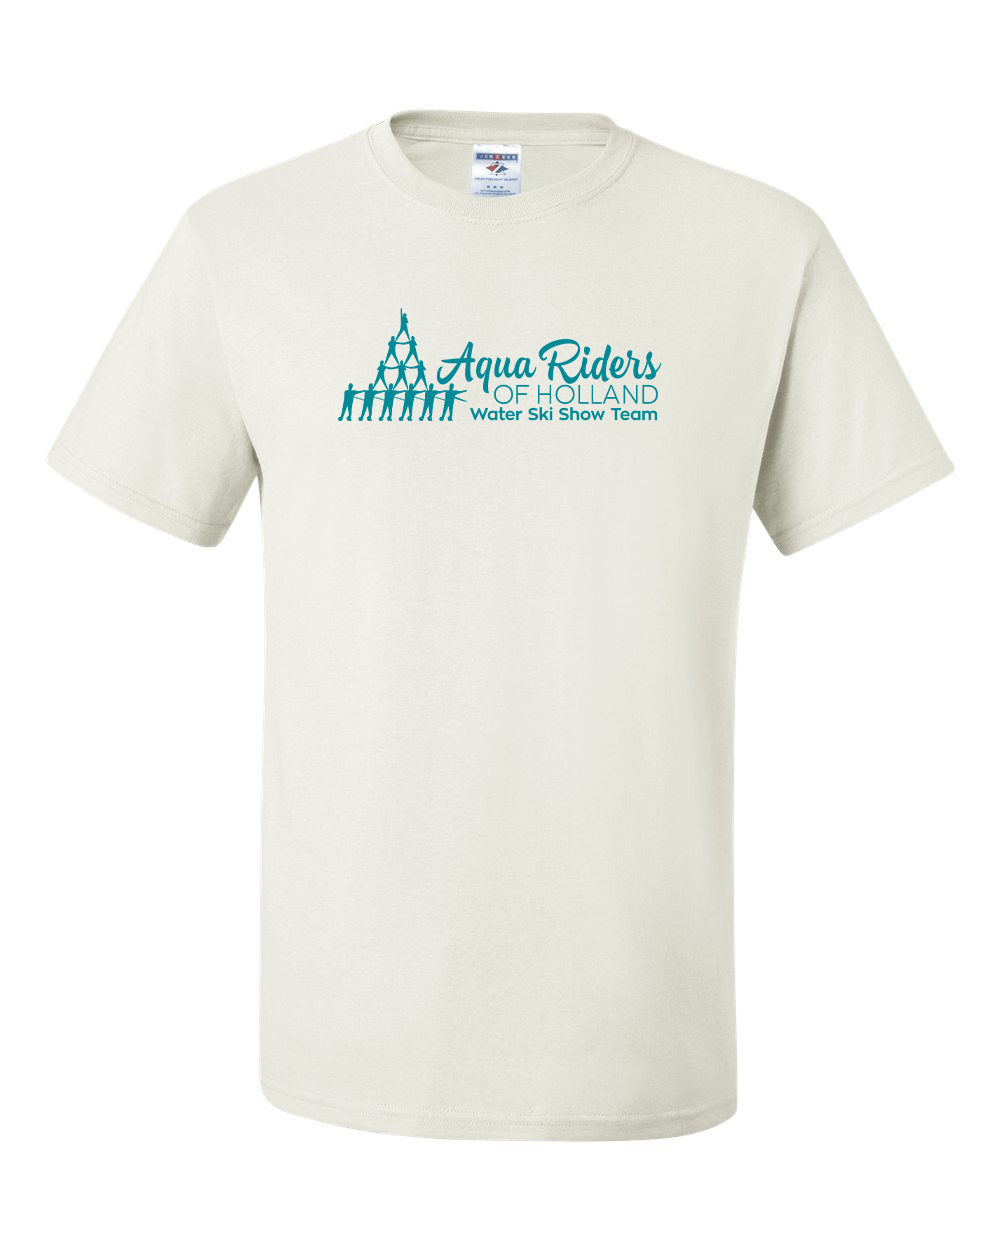 Aqua Riders - Adult T-shirt - 29MR (color options available)